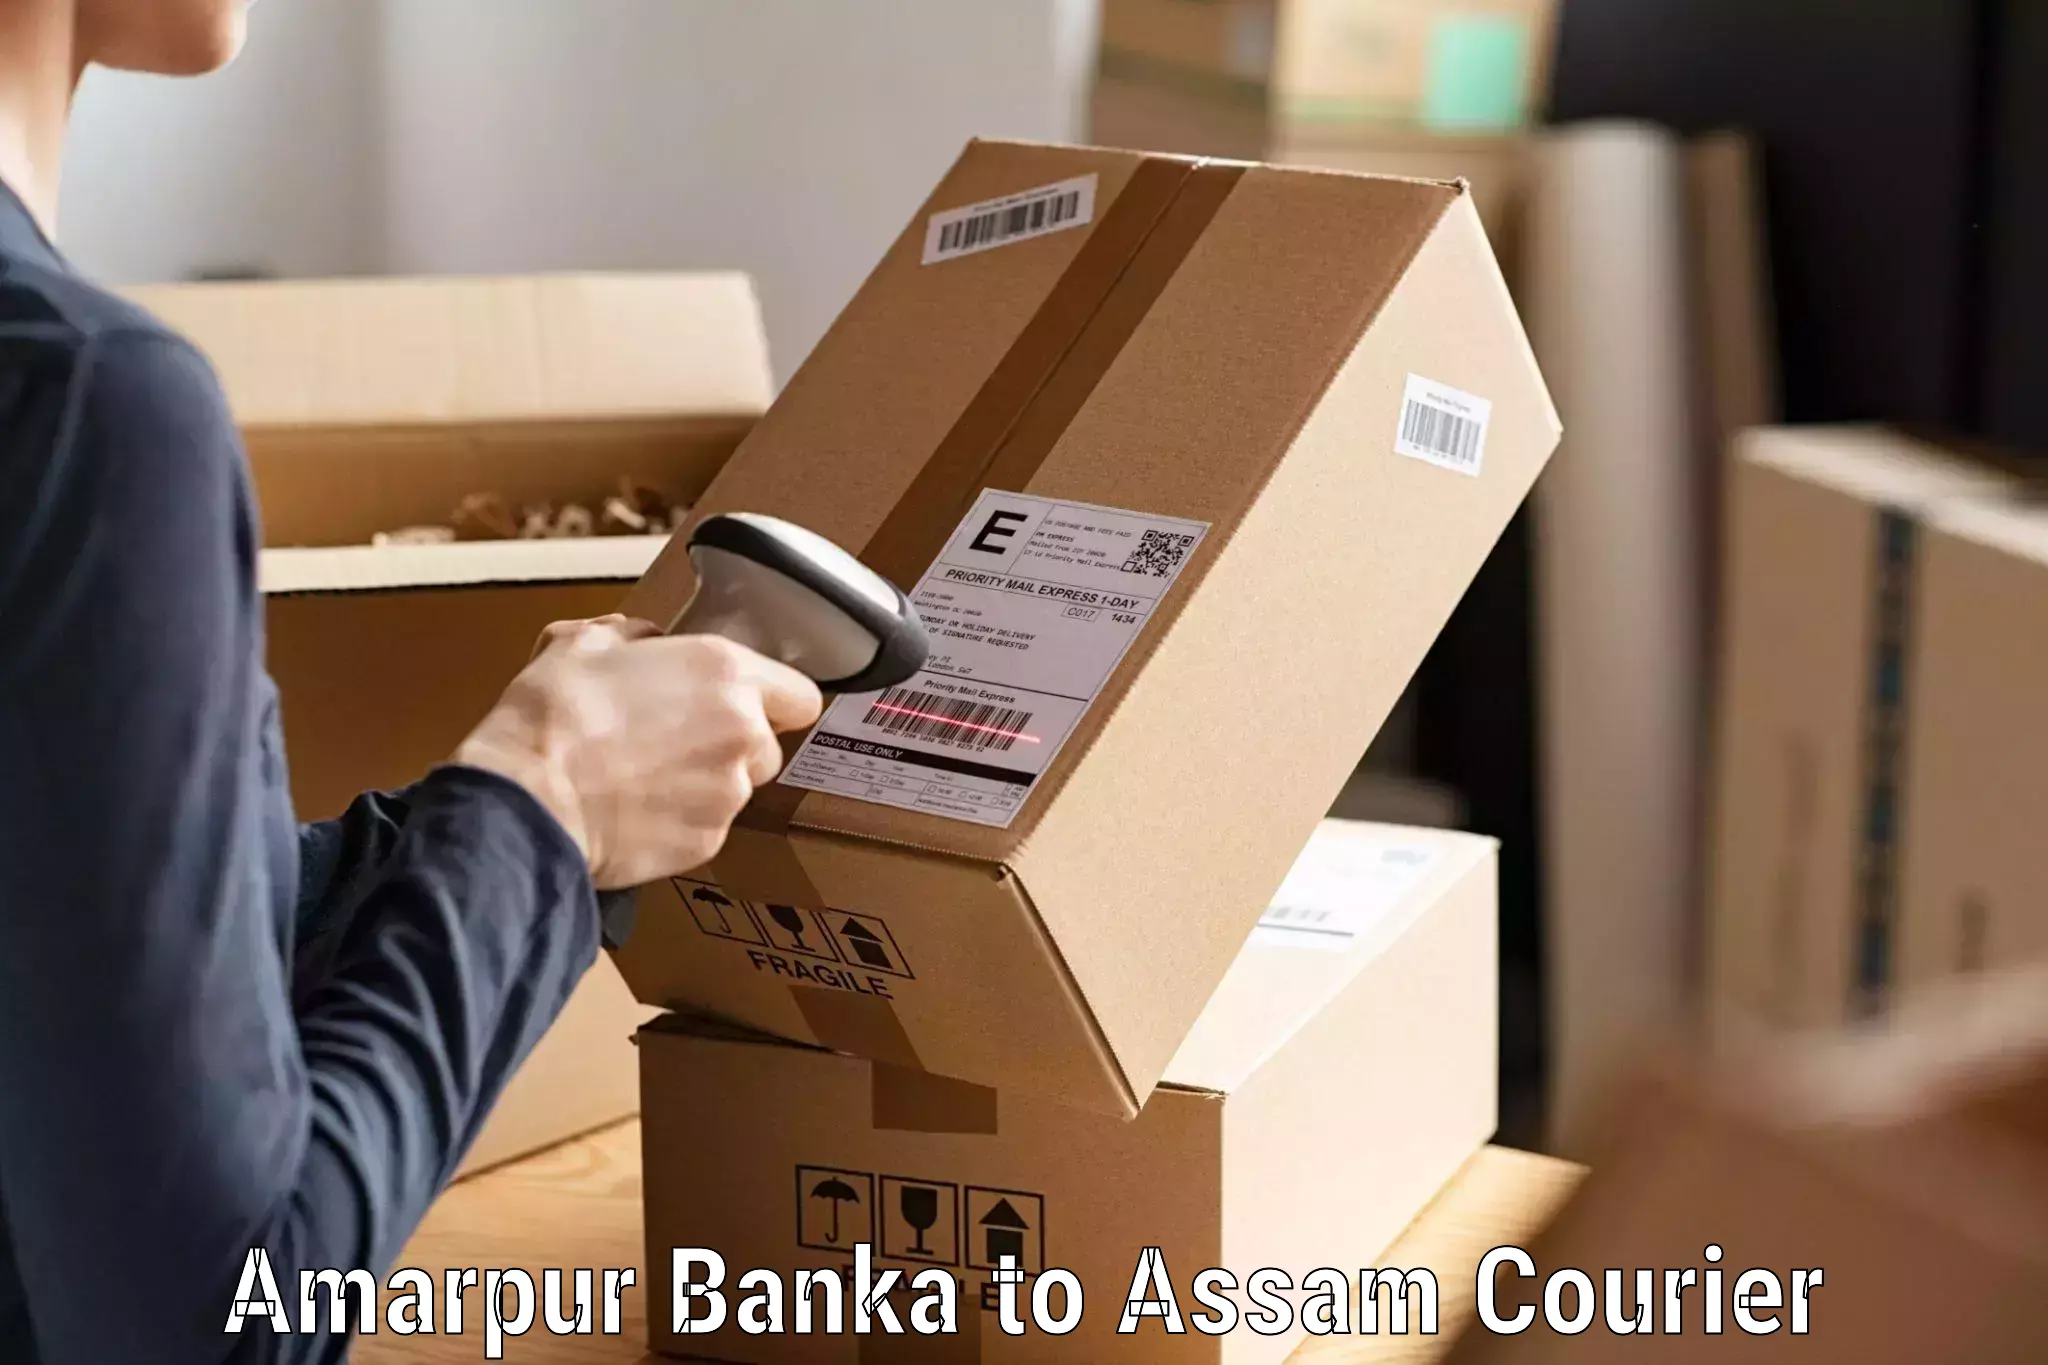 Flexible parcel services Amarpur Banka to Karimganj